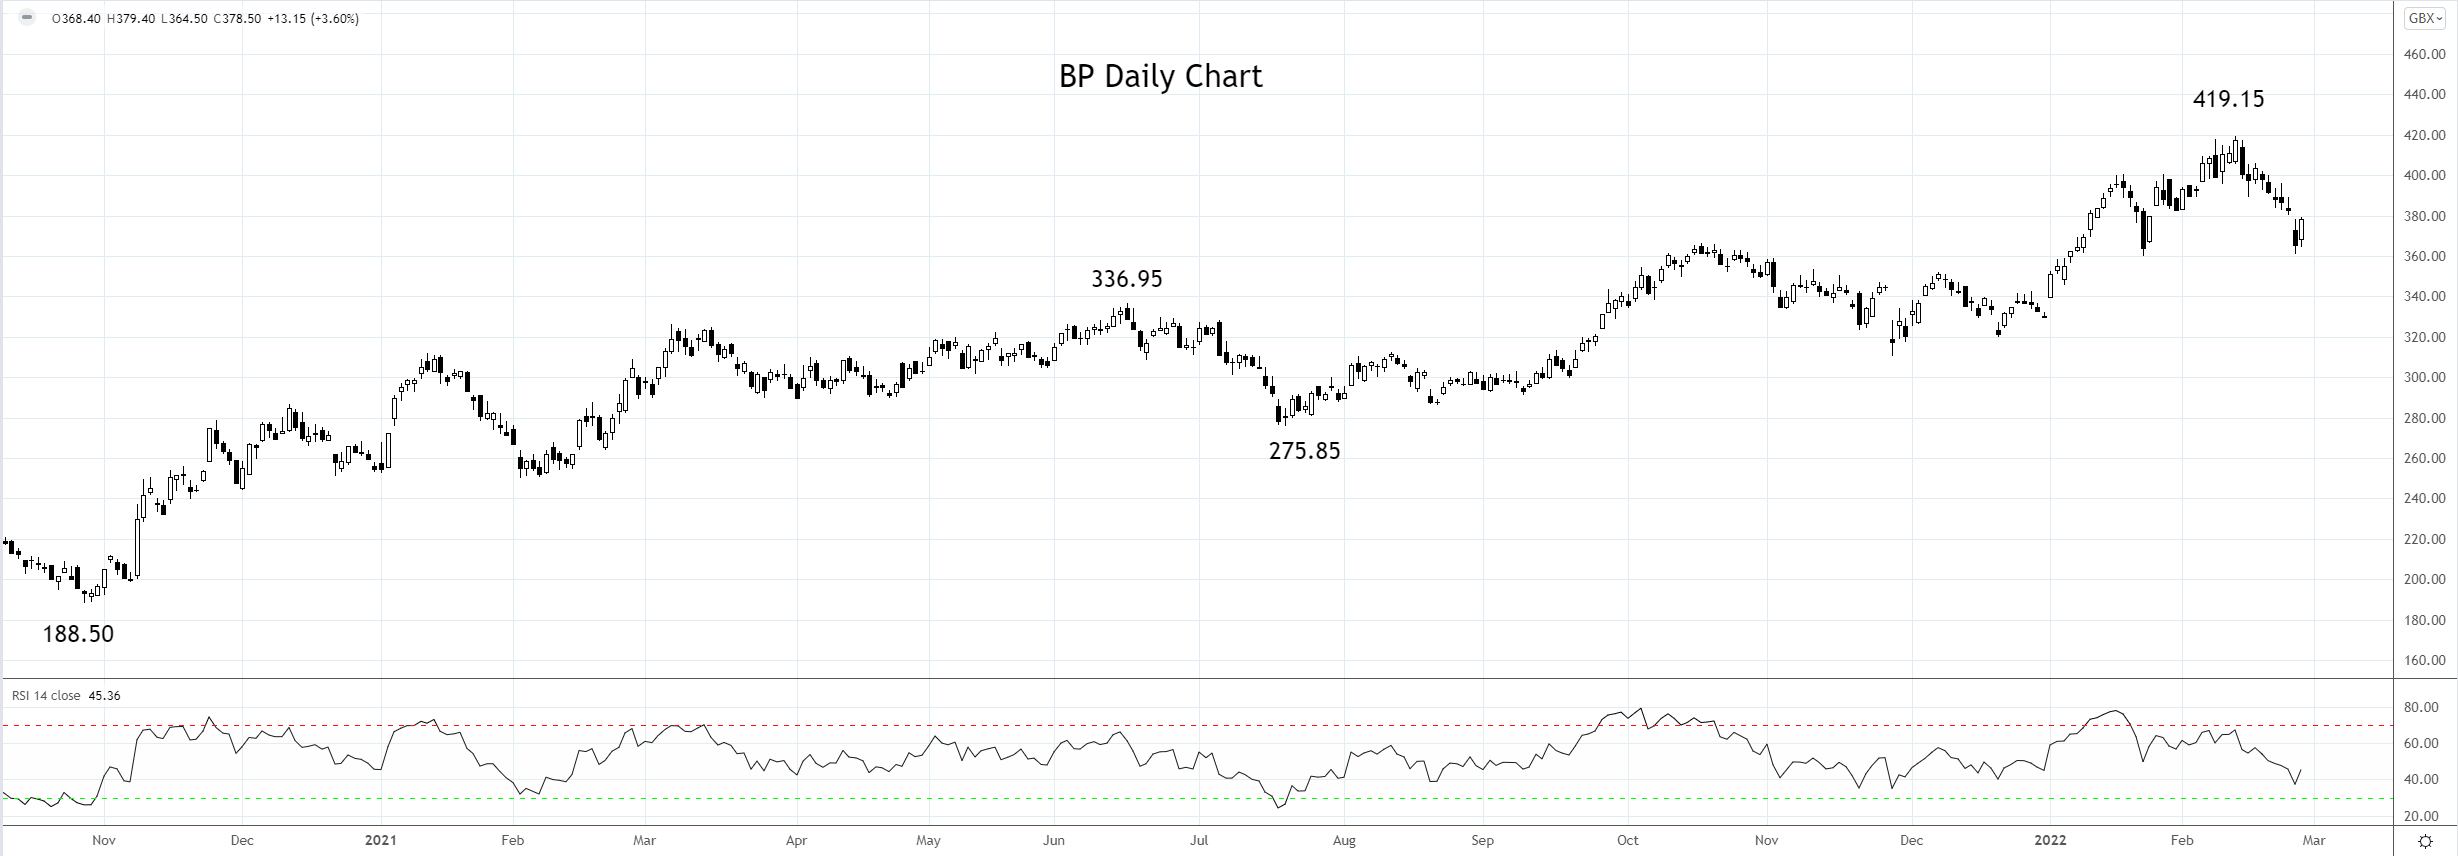 BP Daily Chart 28th of Feb